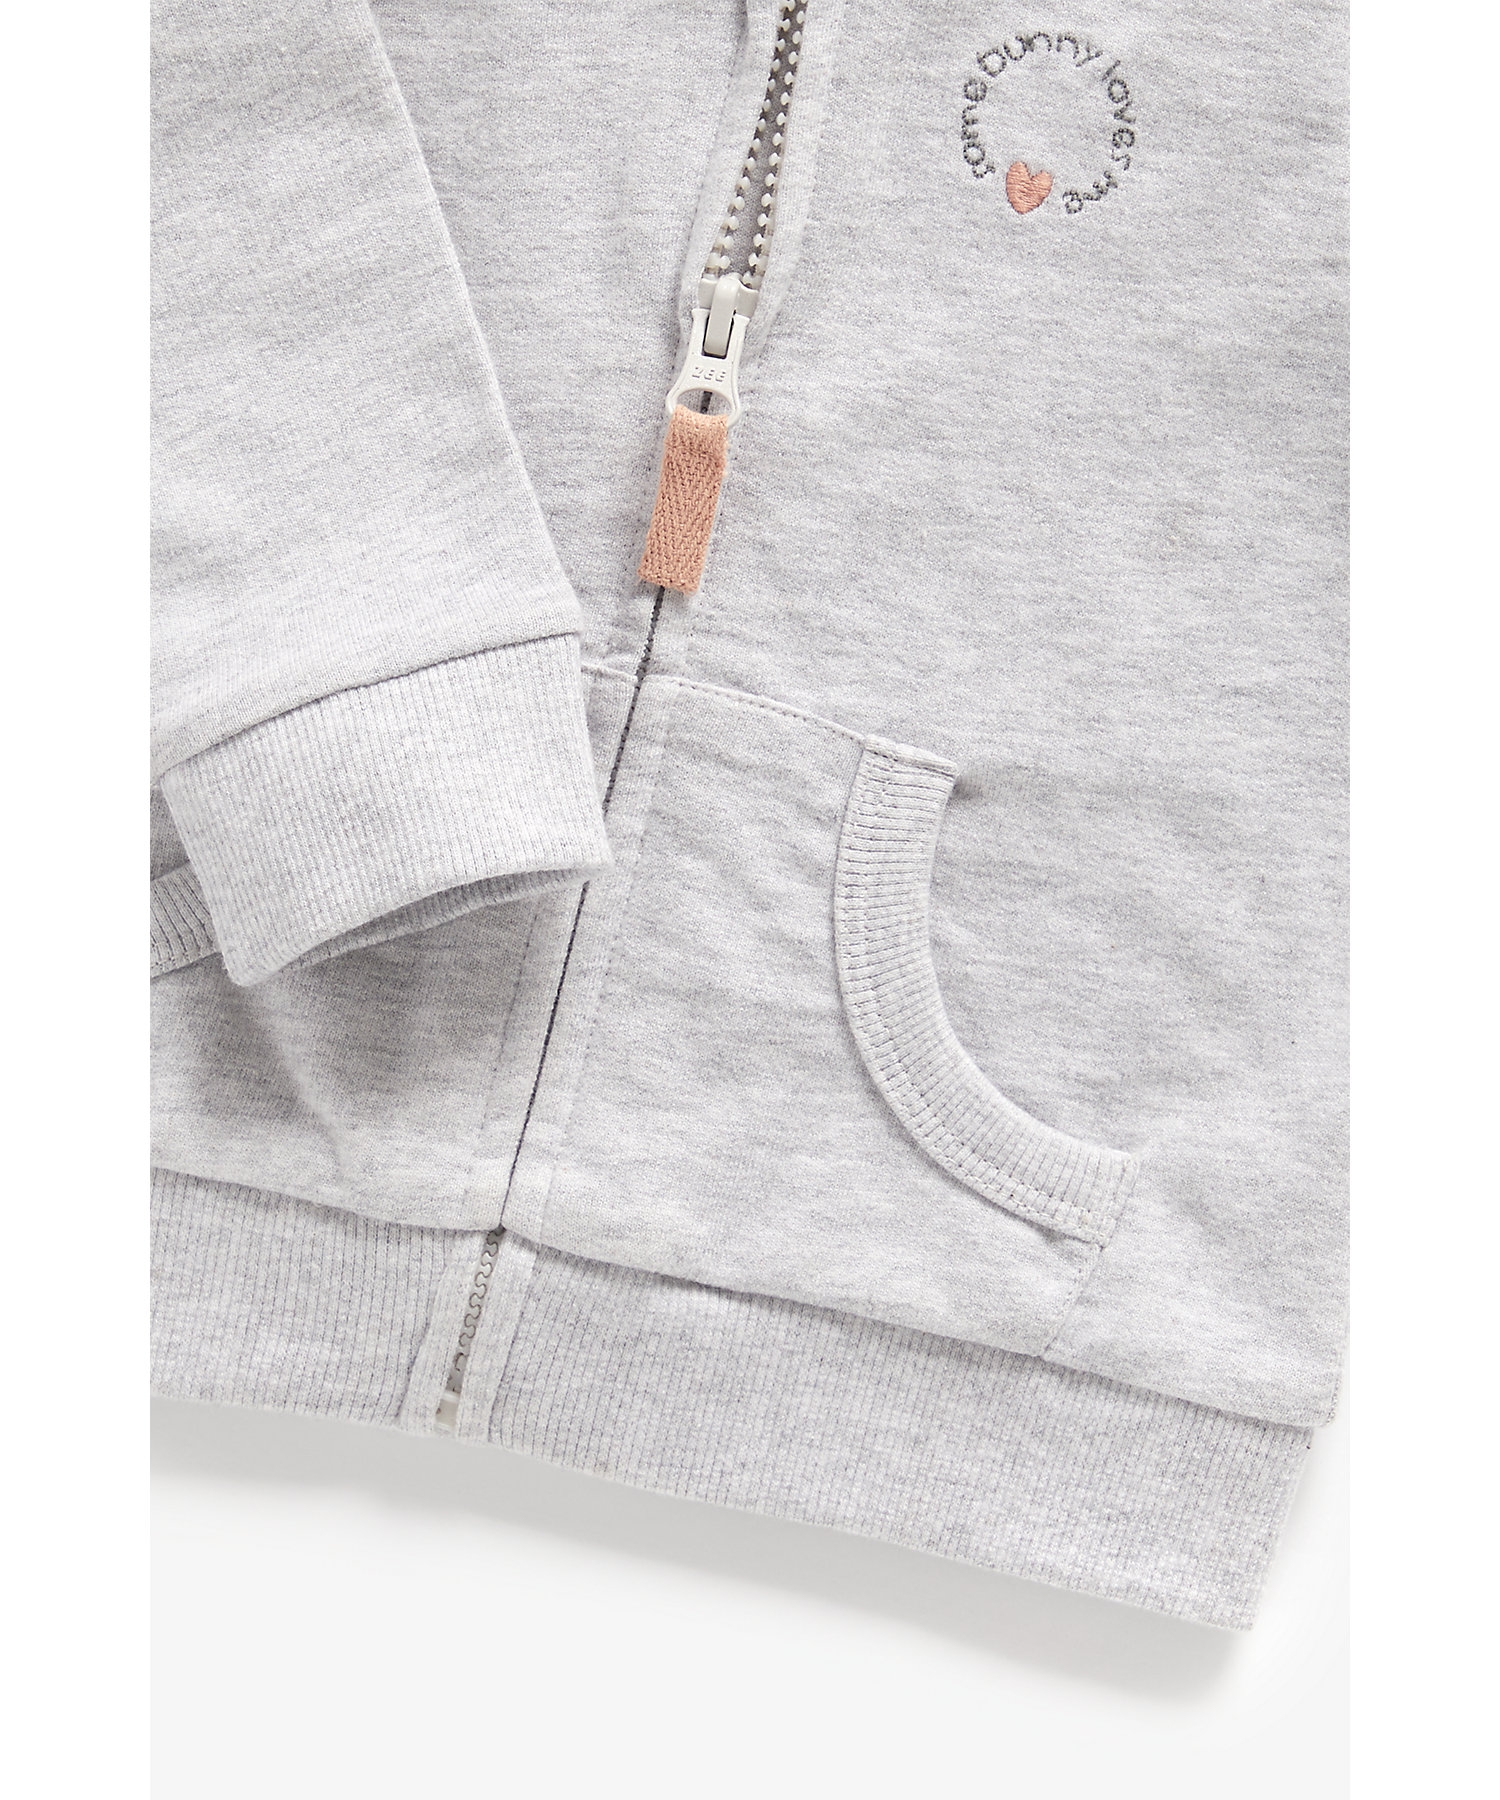 Girls Full Sleeves Hooded Sweatshirt 3D Bunny Ear Details - Grey